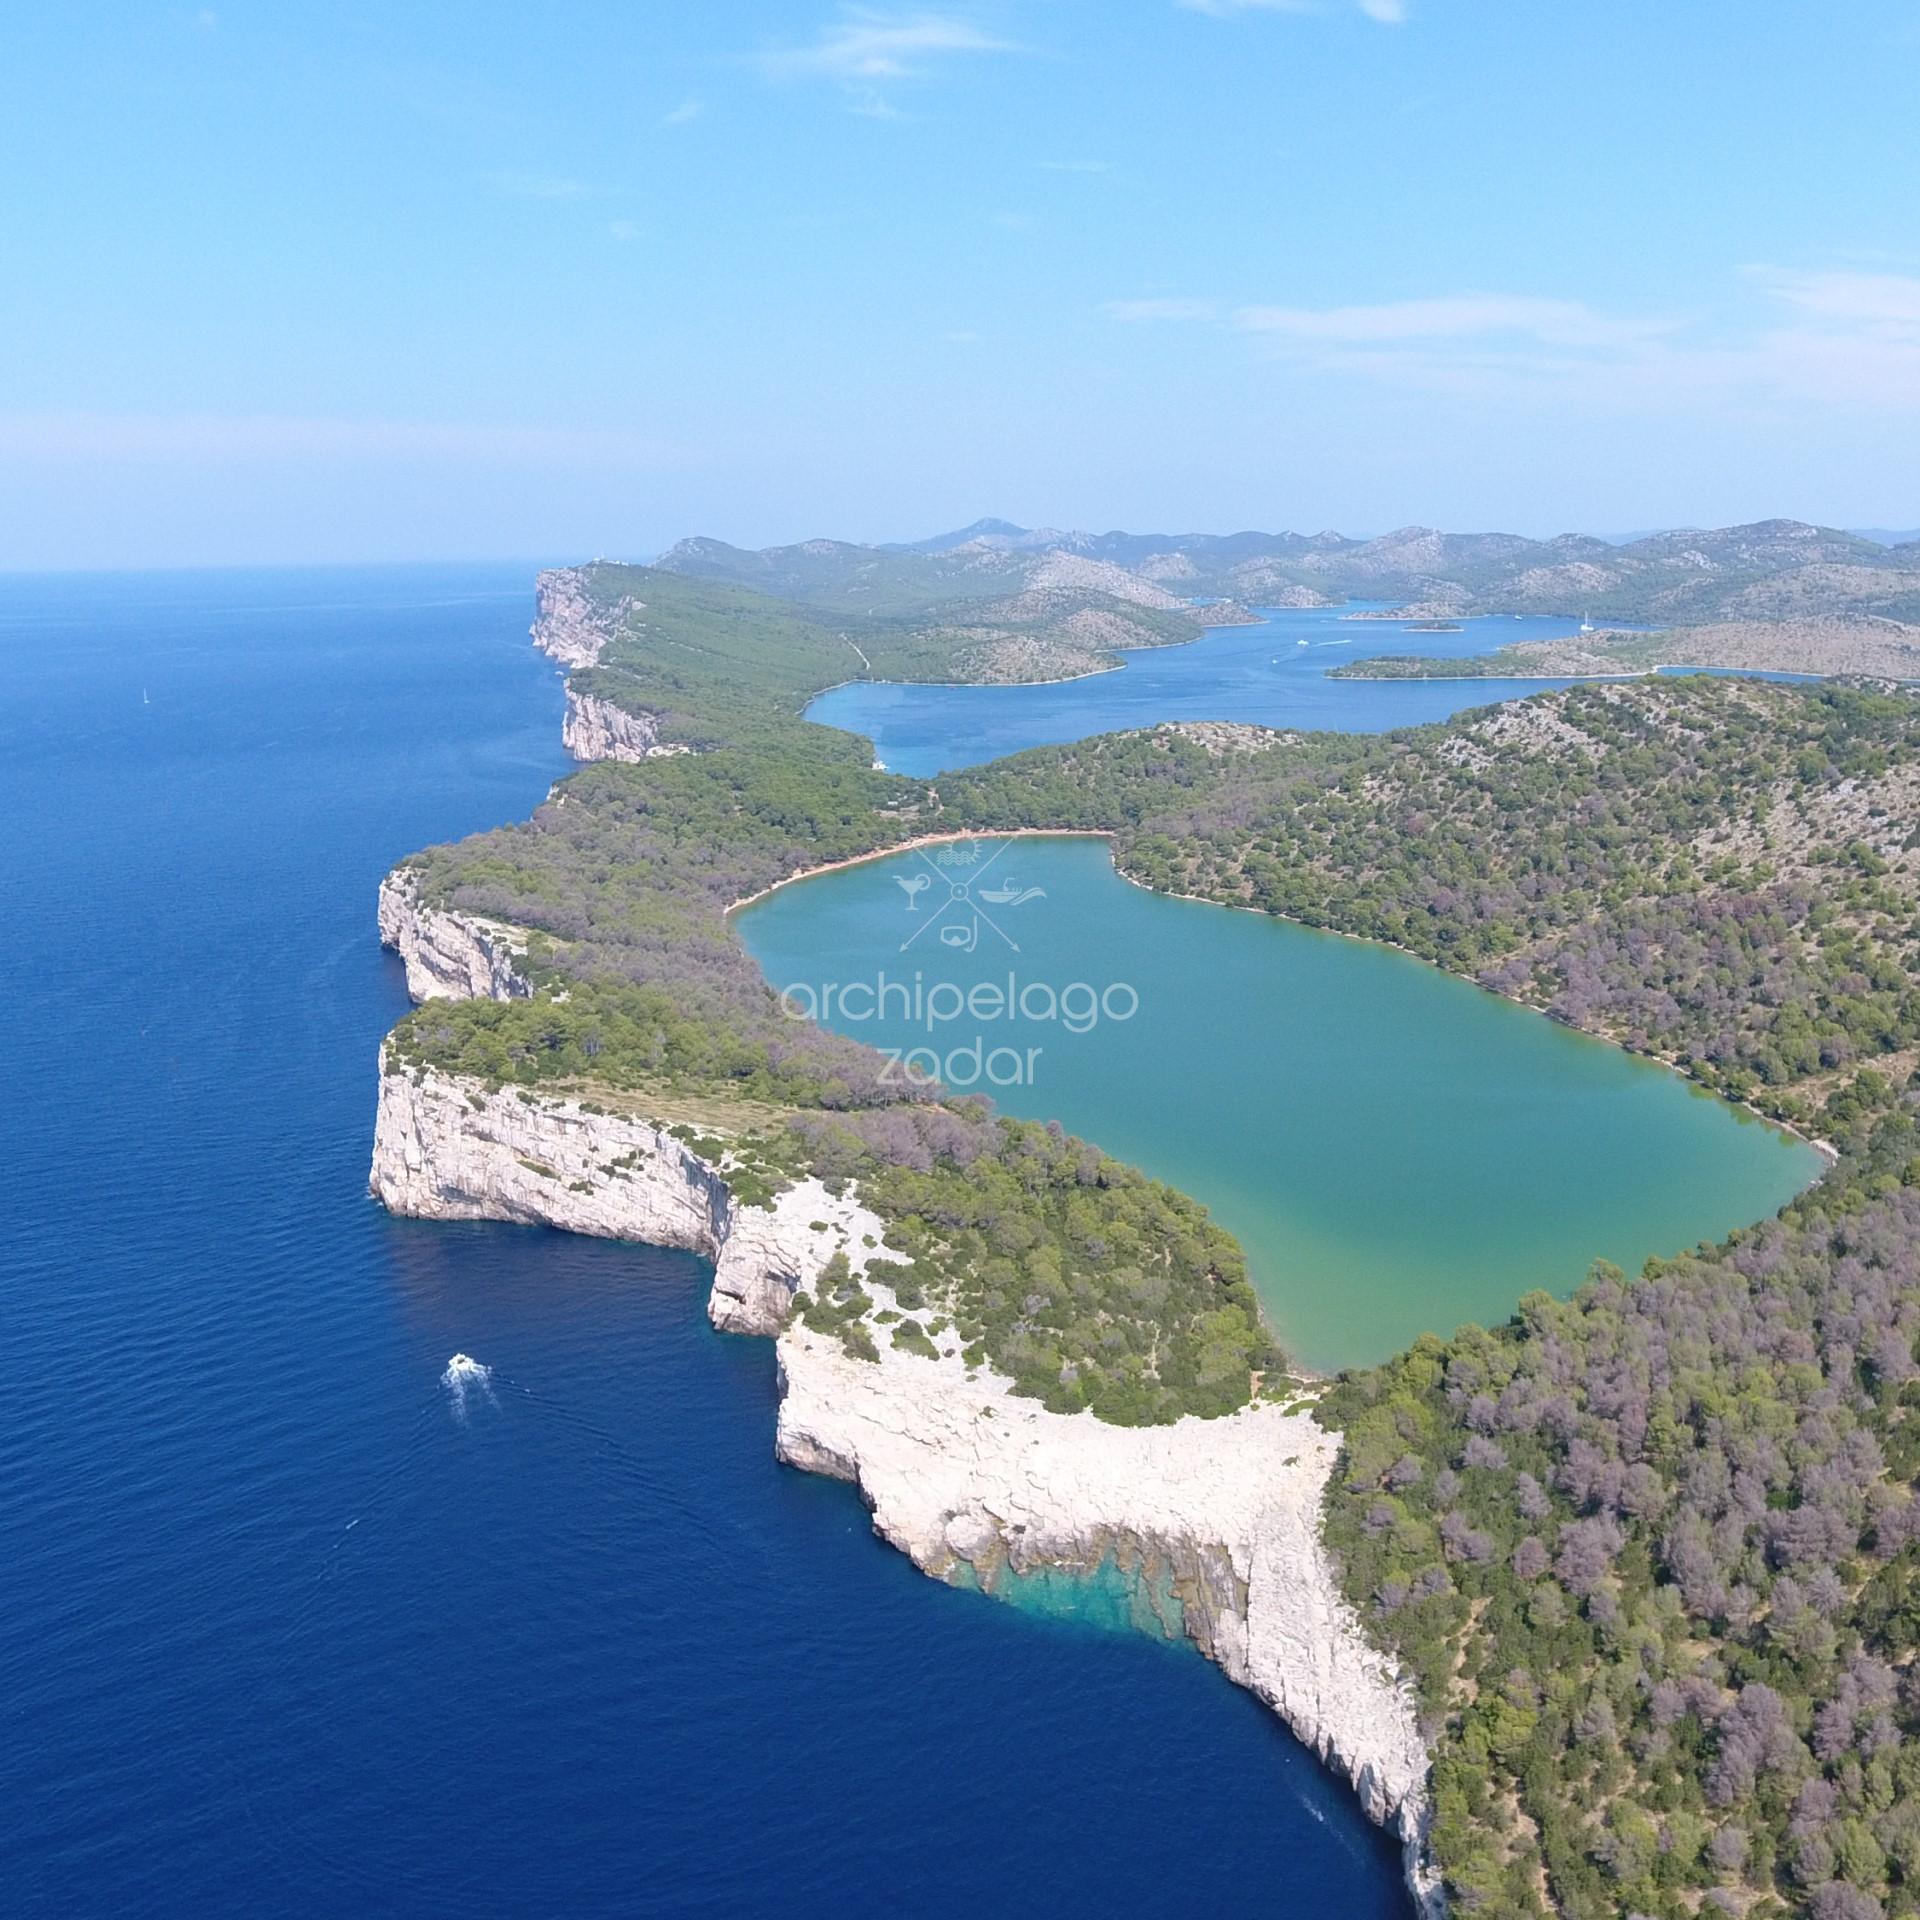 telaščica nature park and salt lake mir aerial view